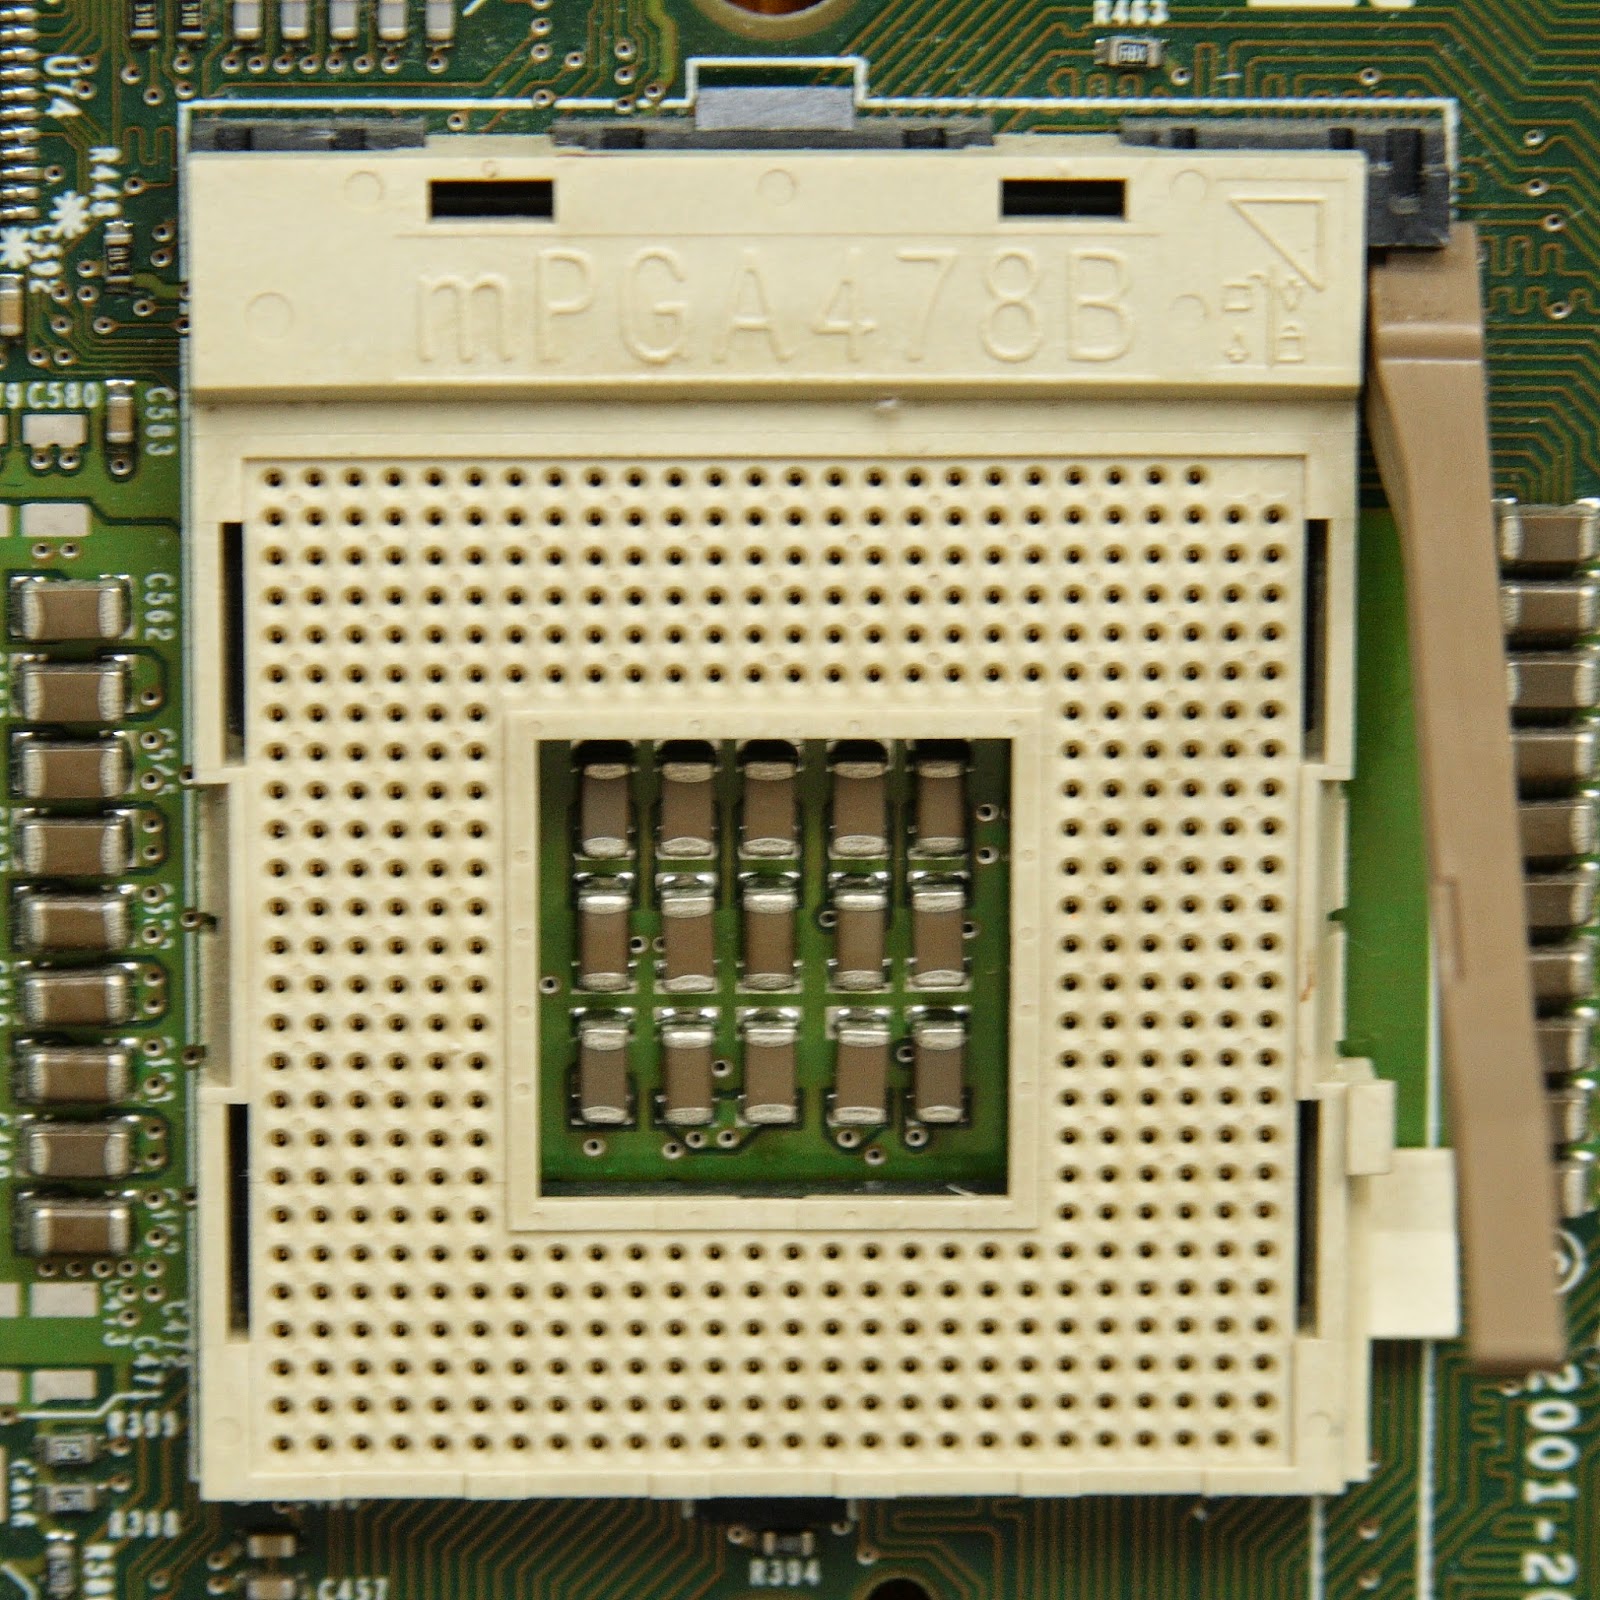 Luthfi Boeleud Blog s Processor Intel Yang Digunakan Untuk Socket 478 